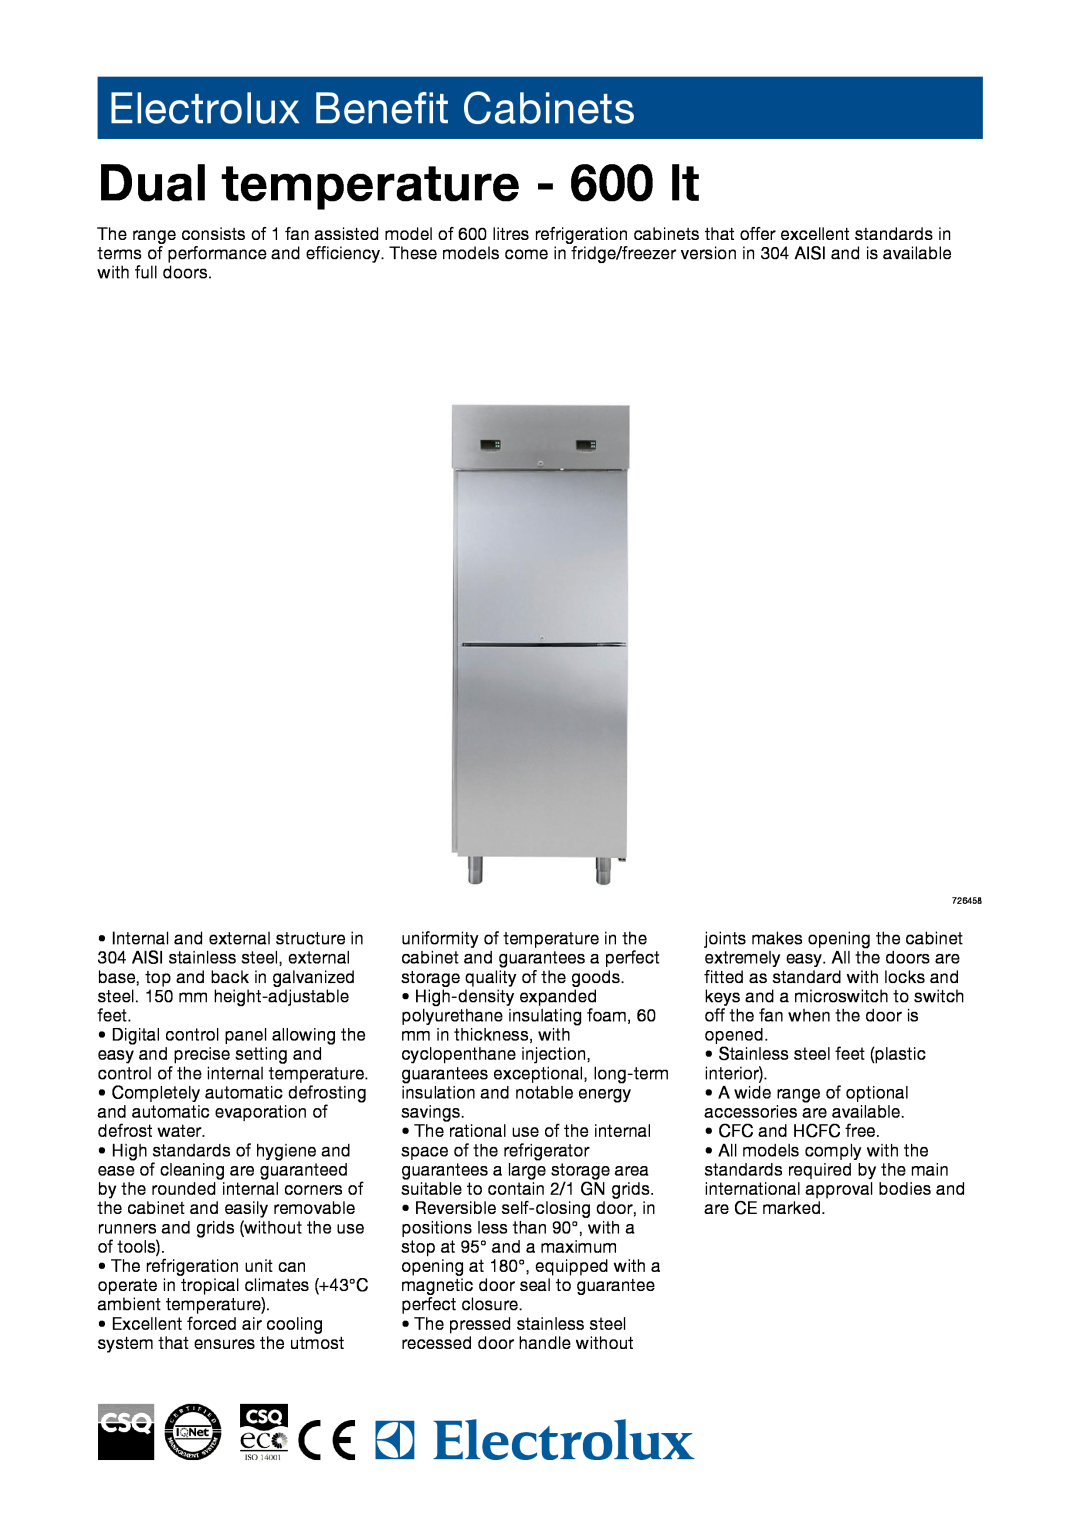 Electrolux 726458 manual Dual temperature - 600 lt, Electrolux Benefit Cabinets 